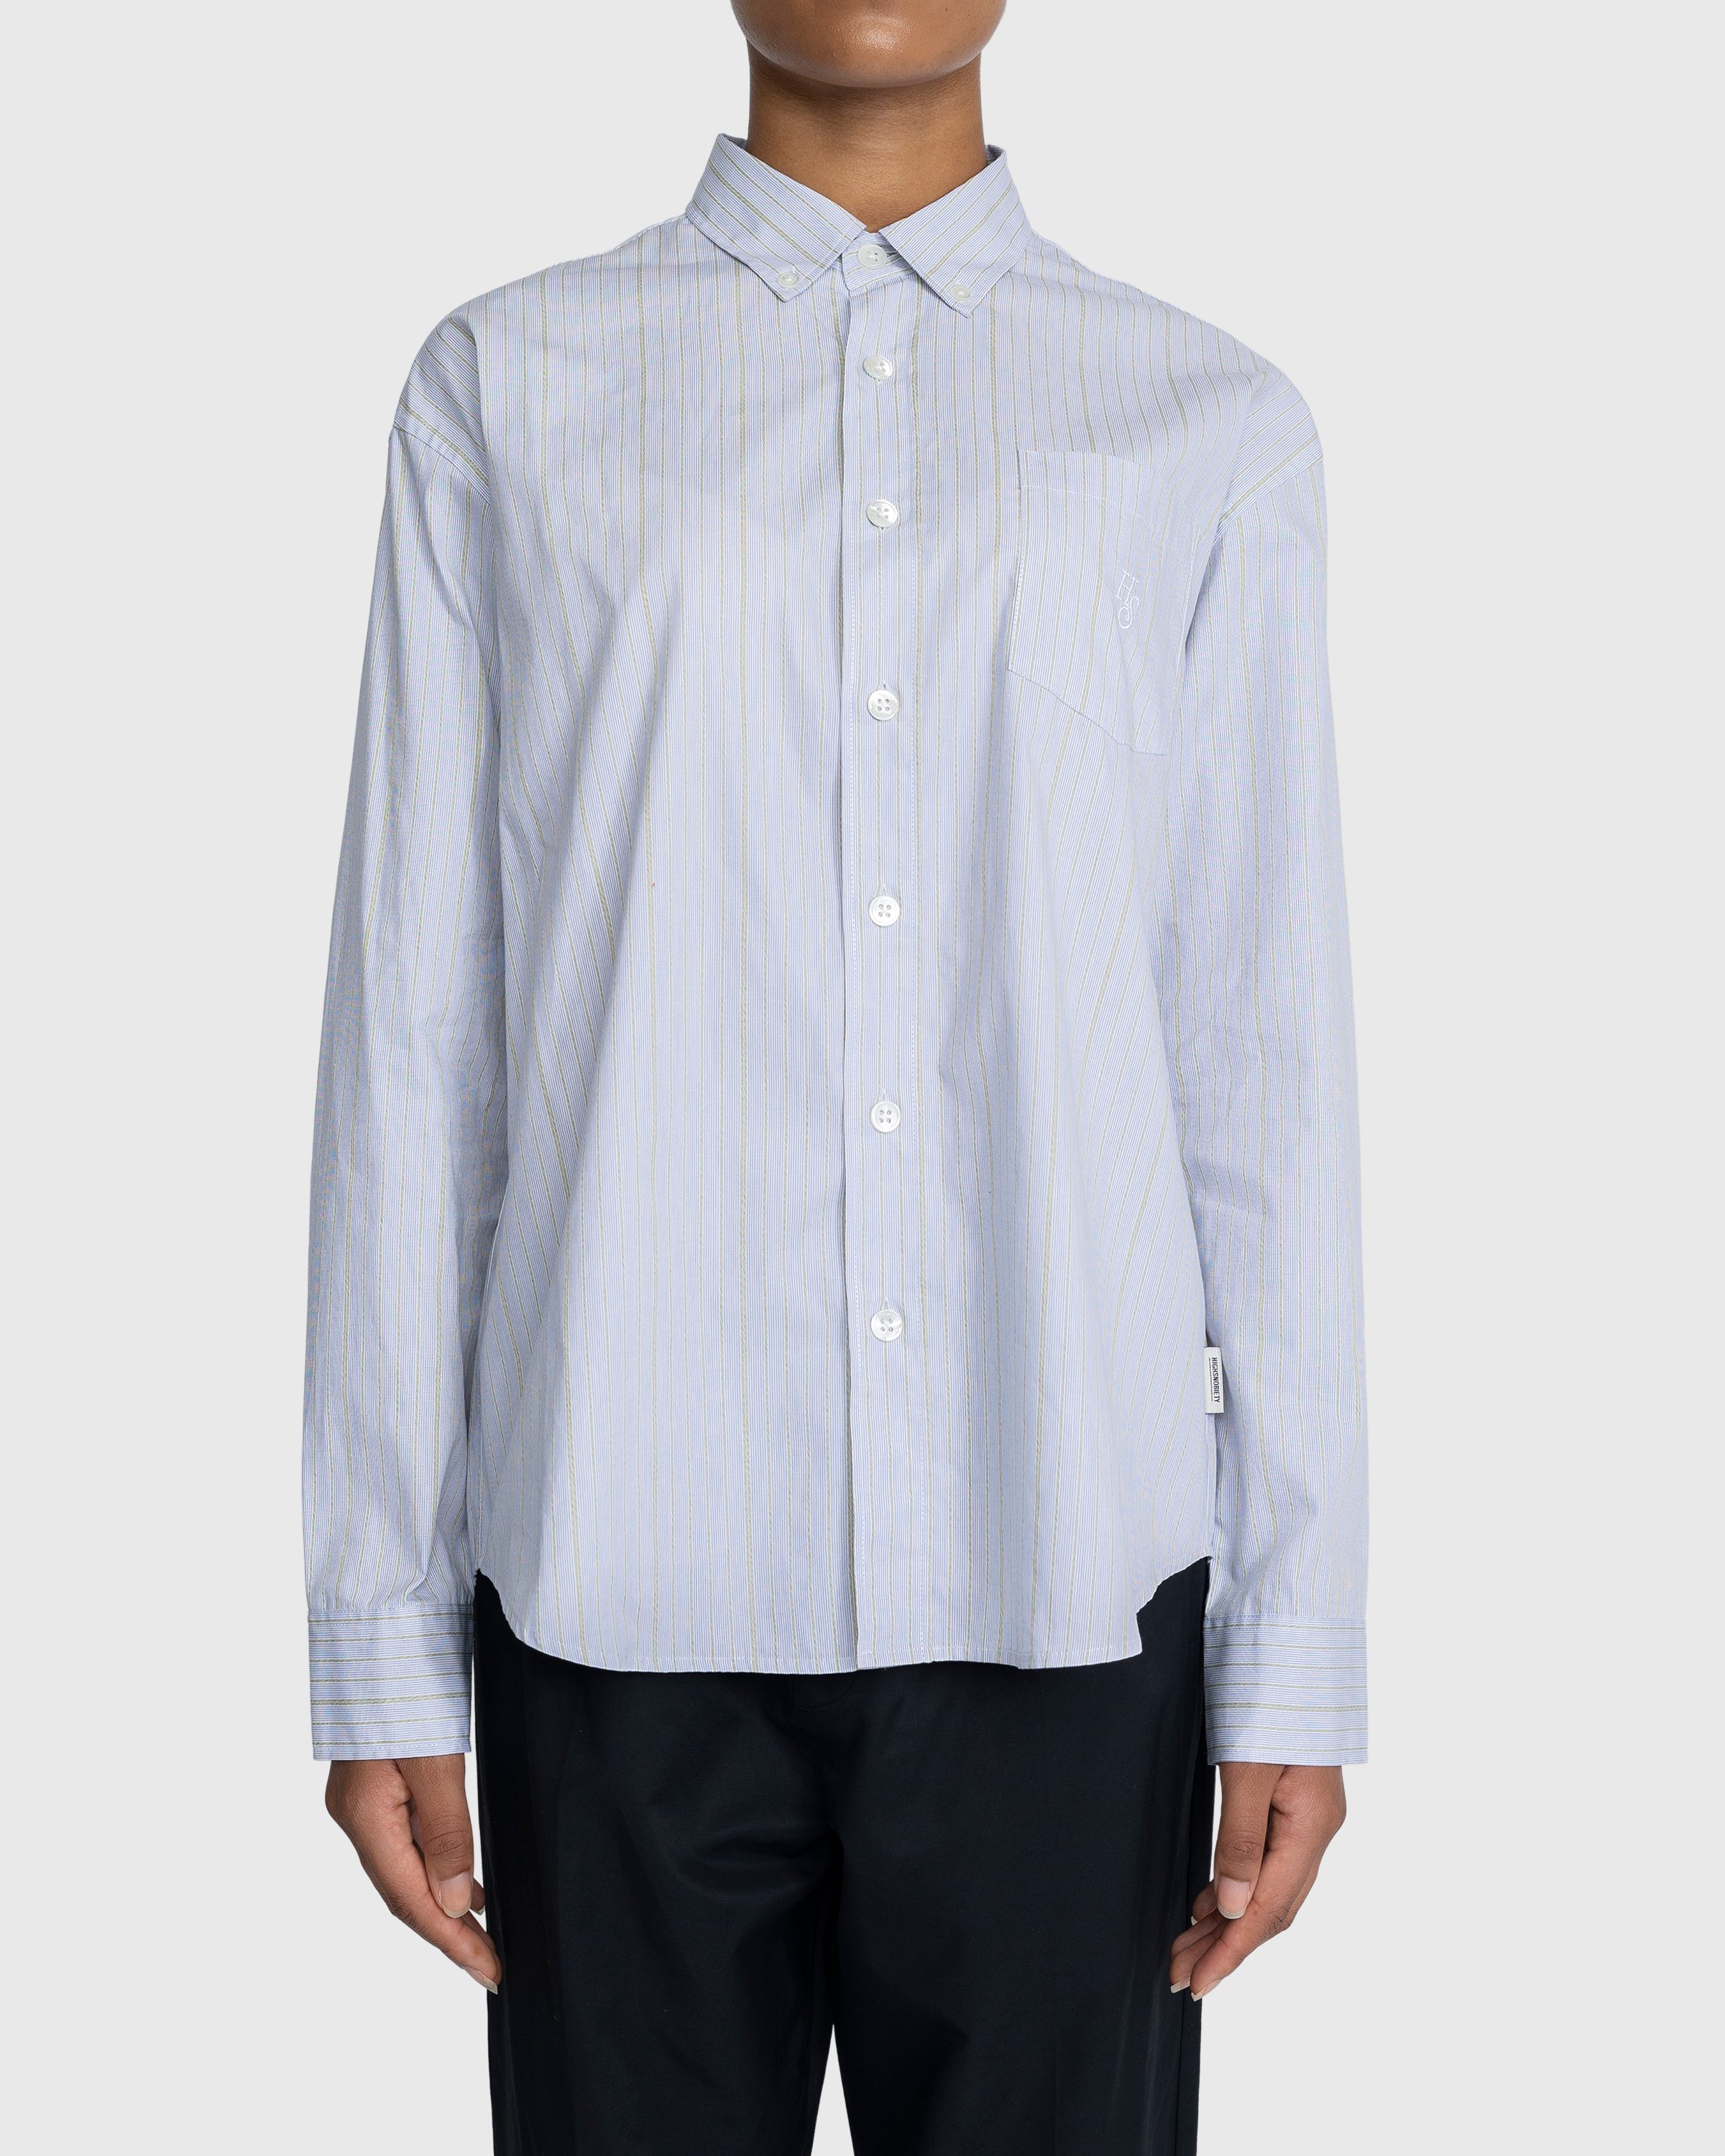 Highsnobiety - Striped Dress Shirt White/Blue - Clothing - Blue - Image 2